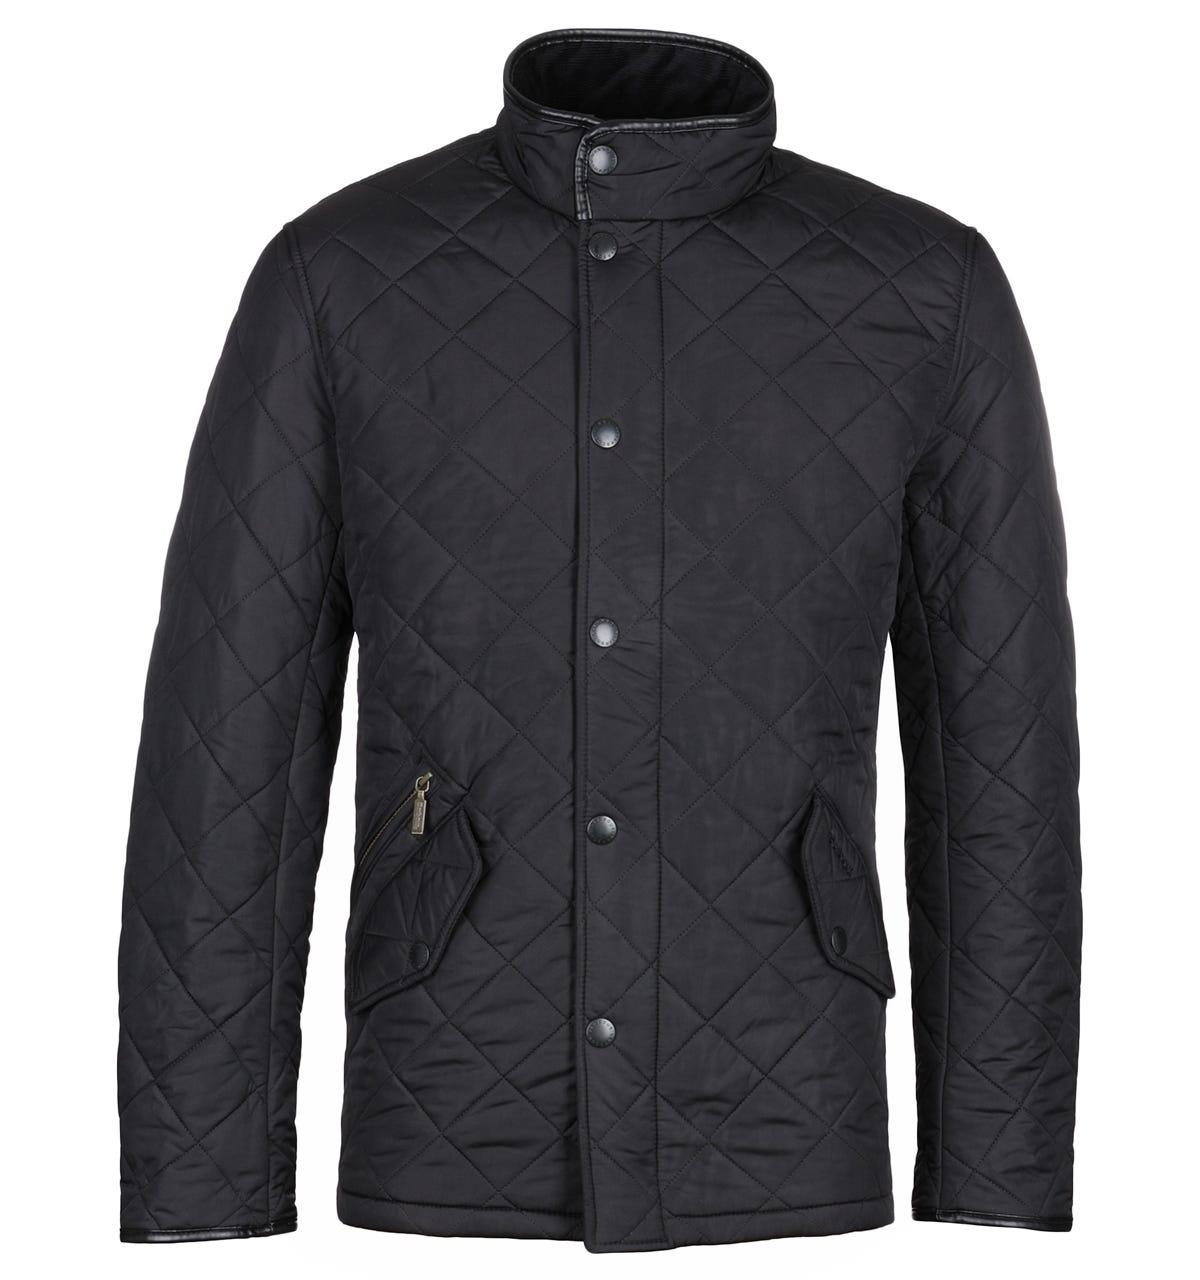 Barbour Fleece Powell Black Quilted Jacket for Men - Lyst